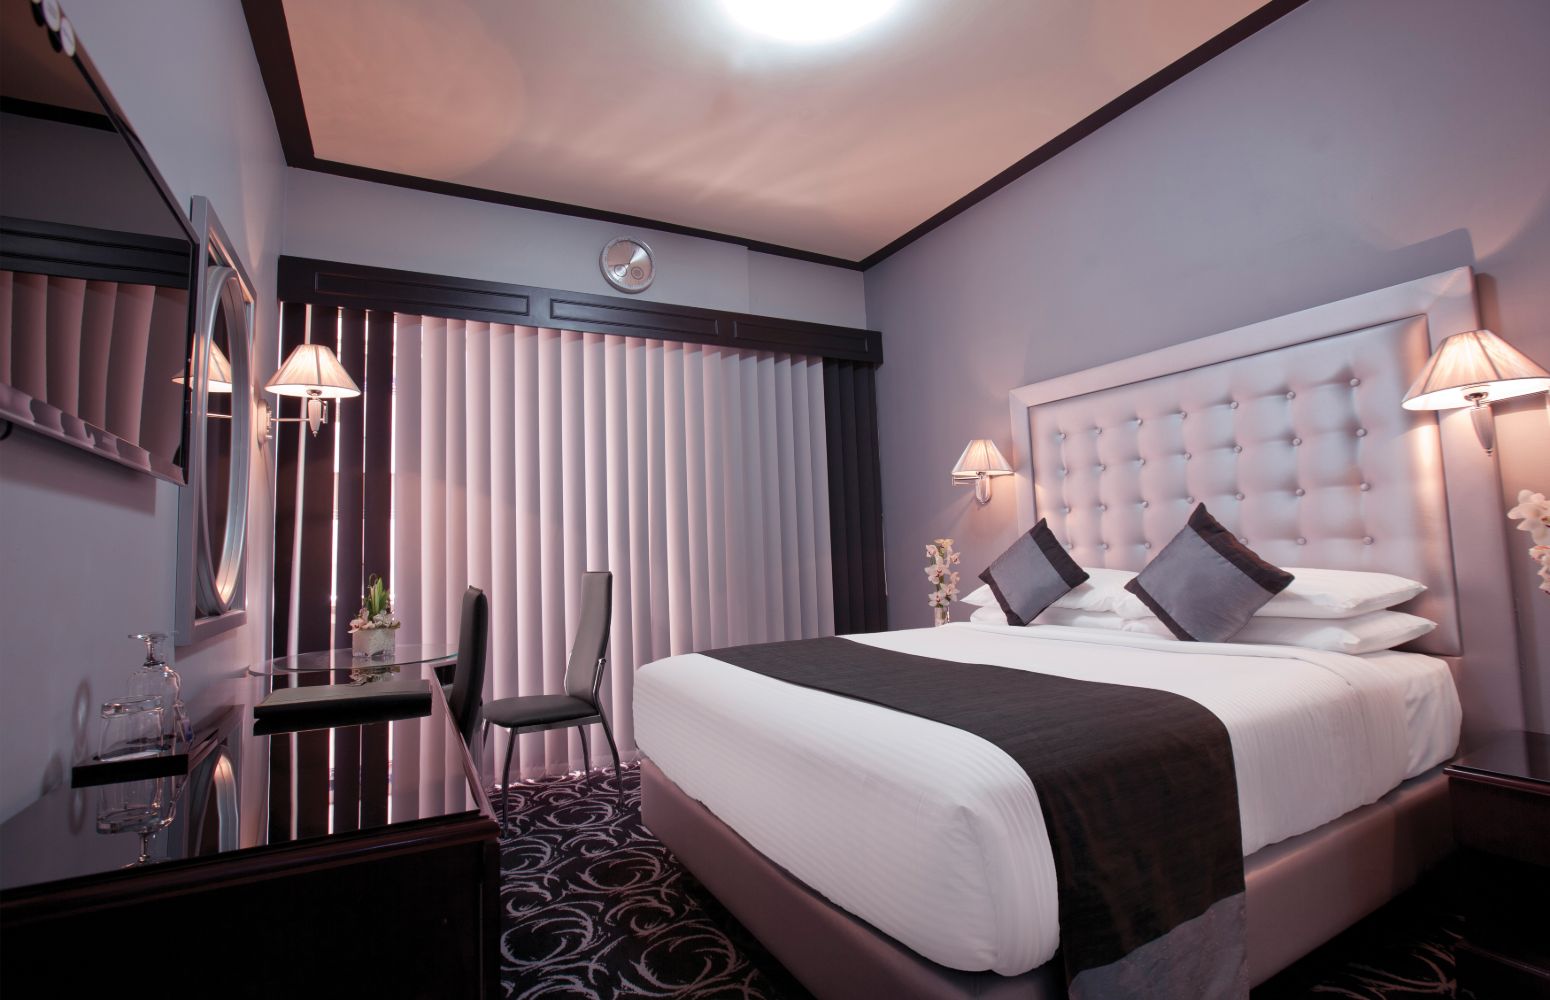 Broadway Hotel Rooms in Deira Dubai